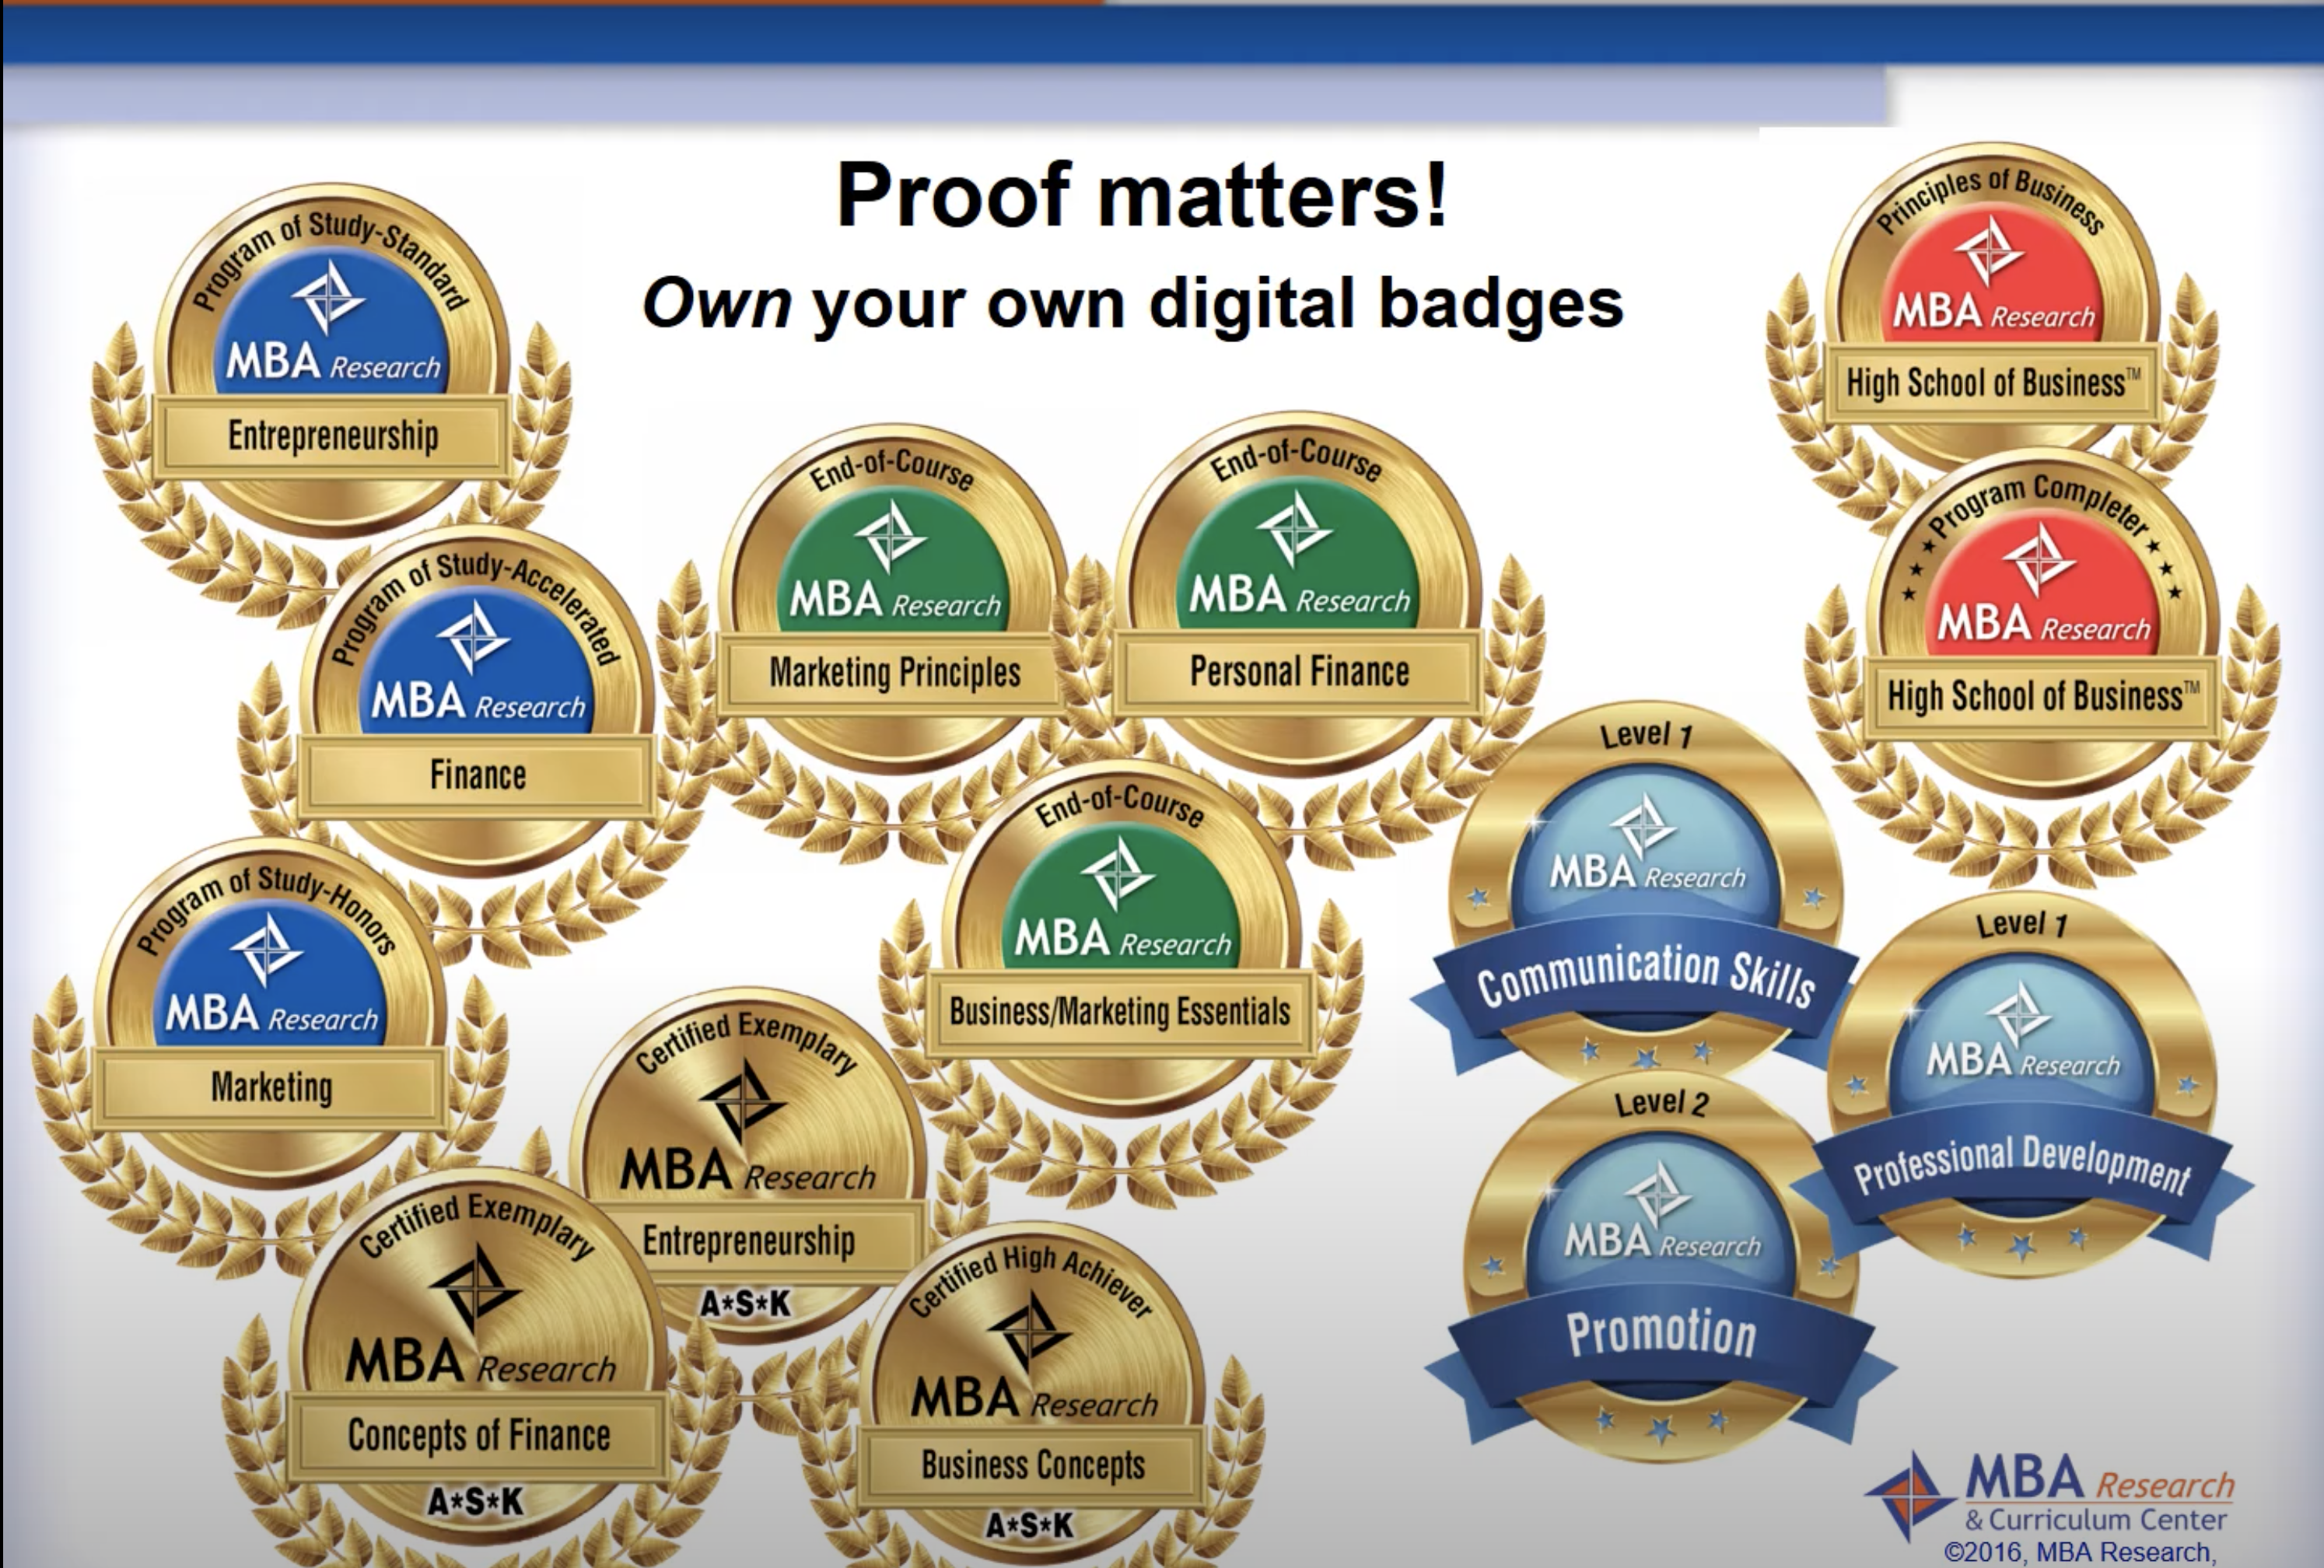 Digital Badges and Academic Transformation